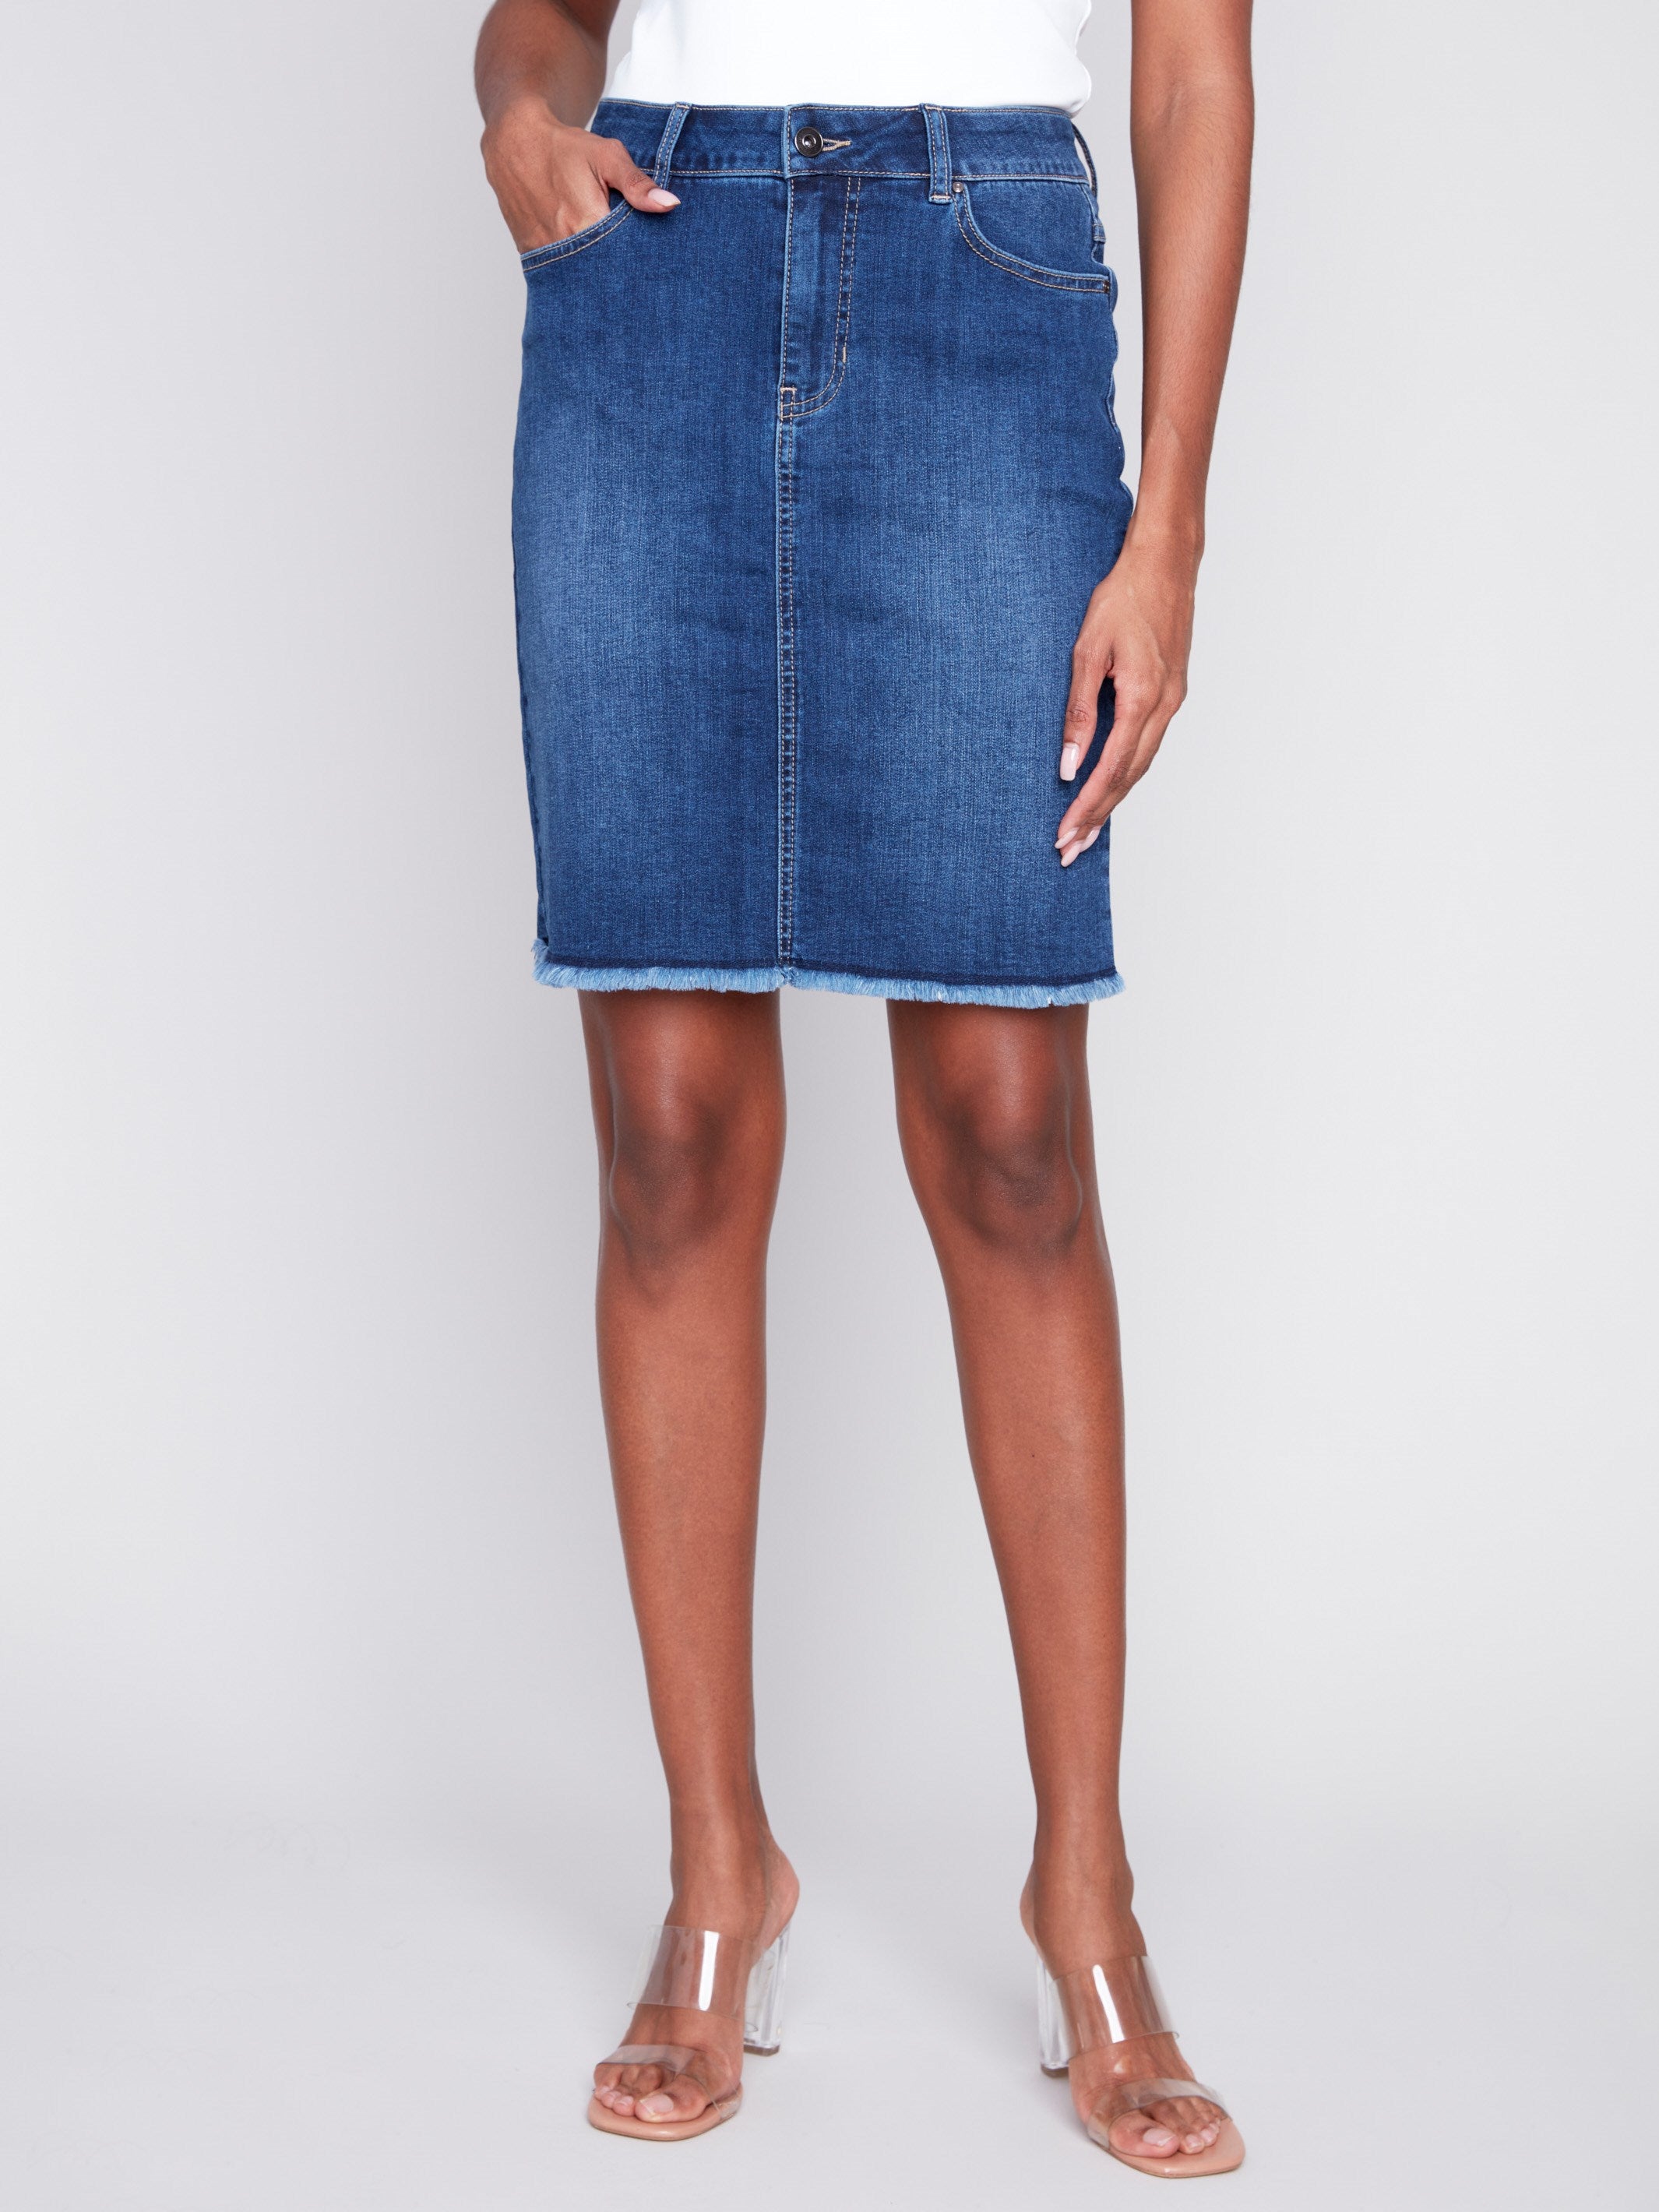 Denim for Women | Jeans, Jackets, Shorts & Skirts | Charlie B